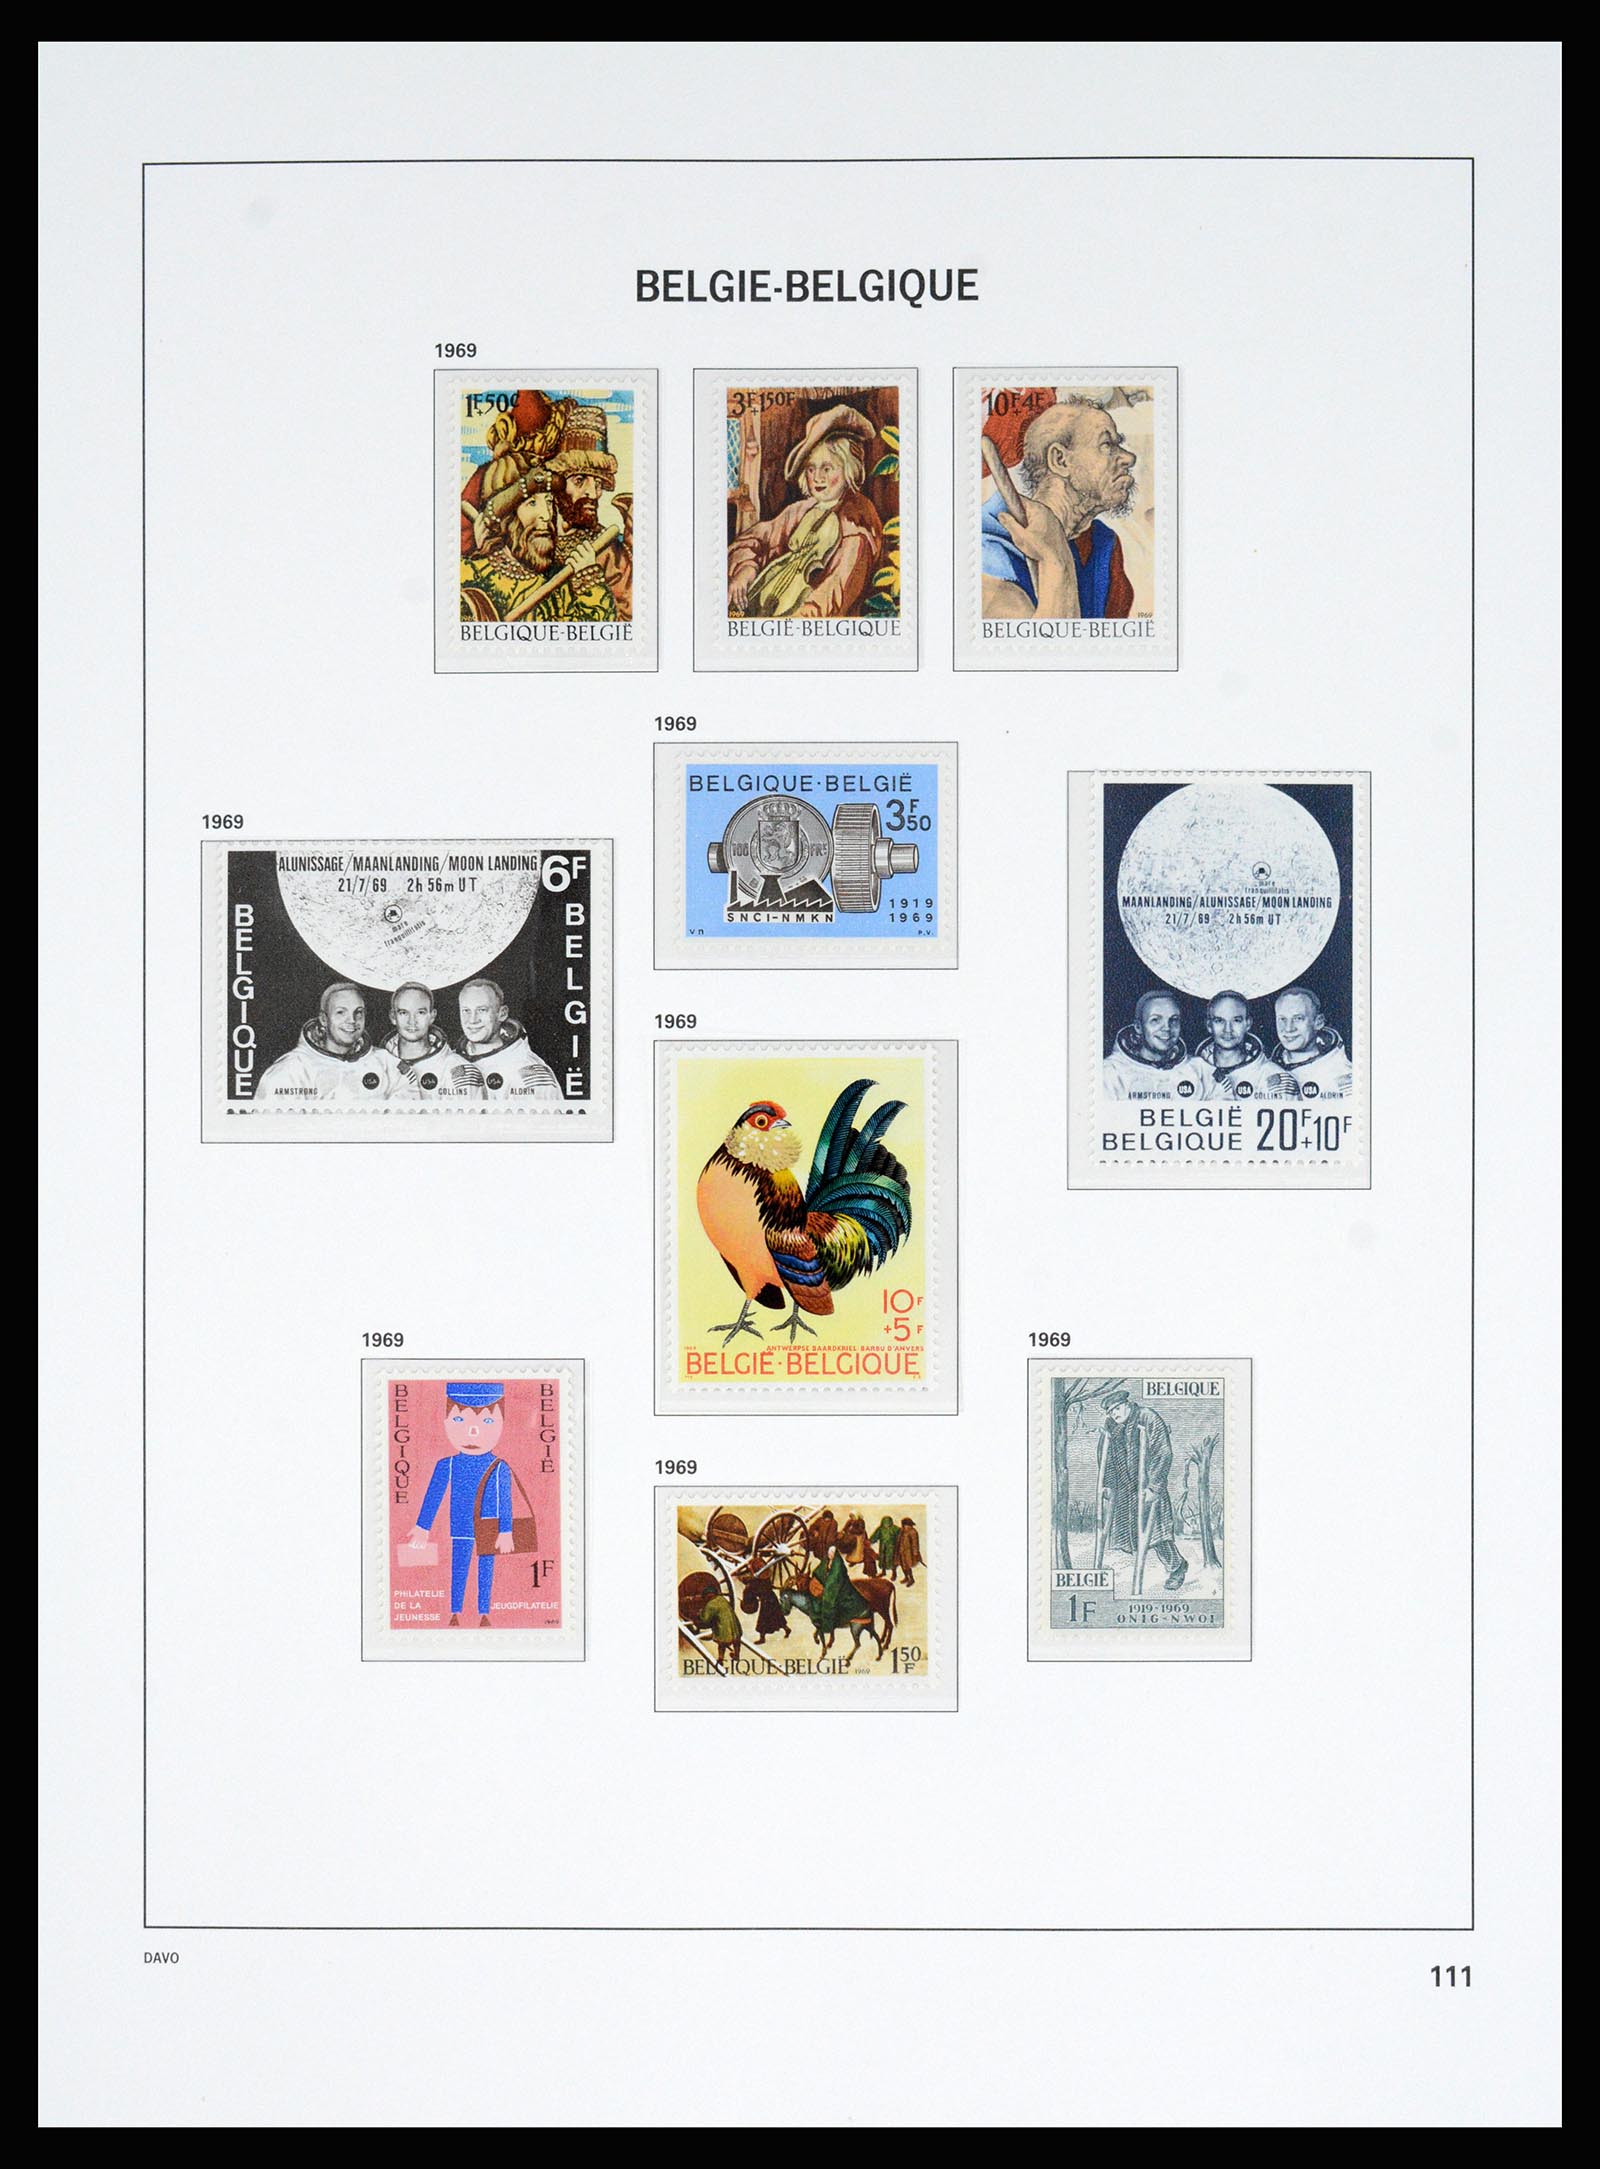 37179 059 - Stamp collection 37179 Belgium 1949-2000.